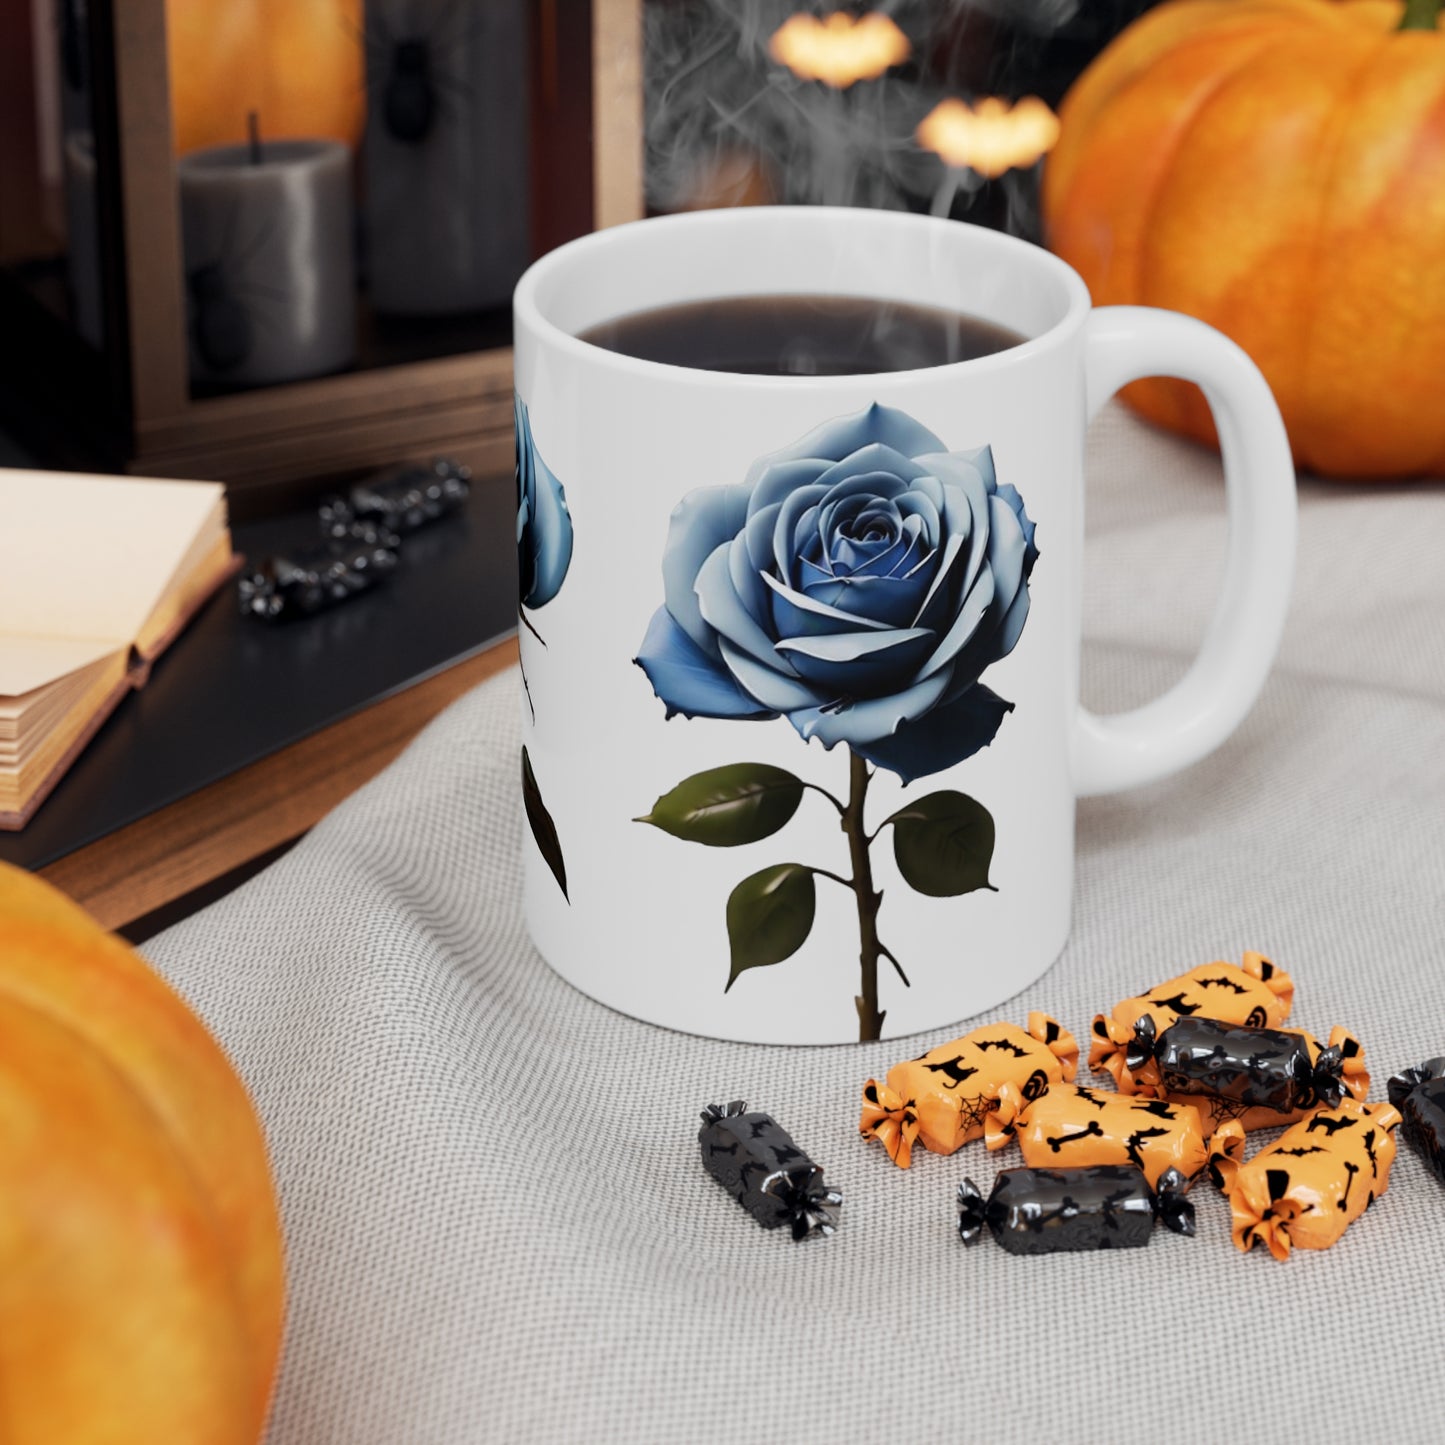 Blue Roses Mug - Ceramic Coffee Mug 11oz